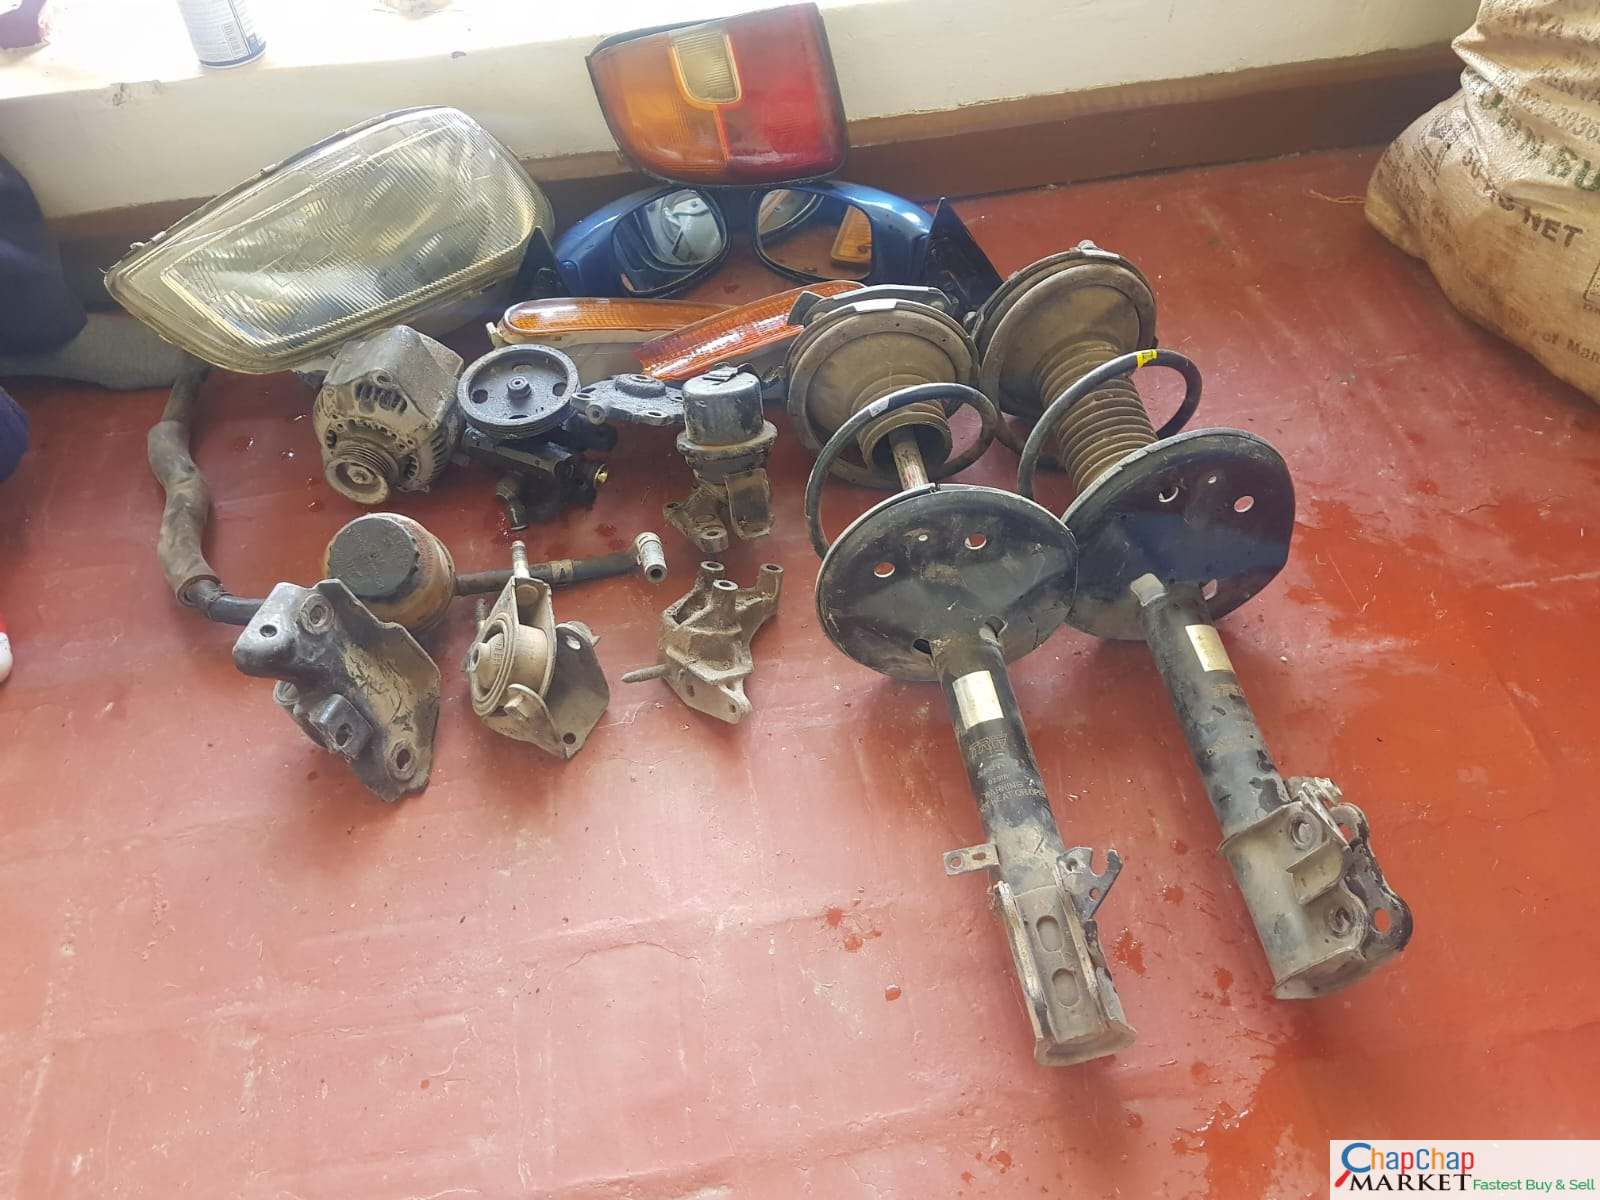 Toyota RAV4 parts for sale in kenya